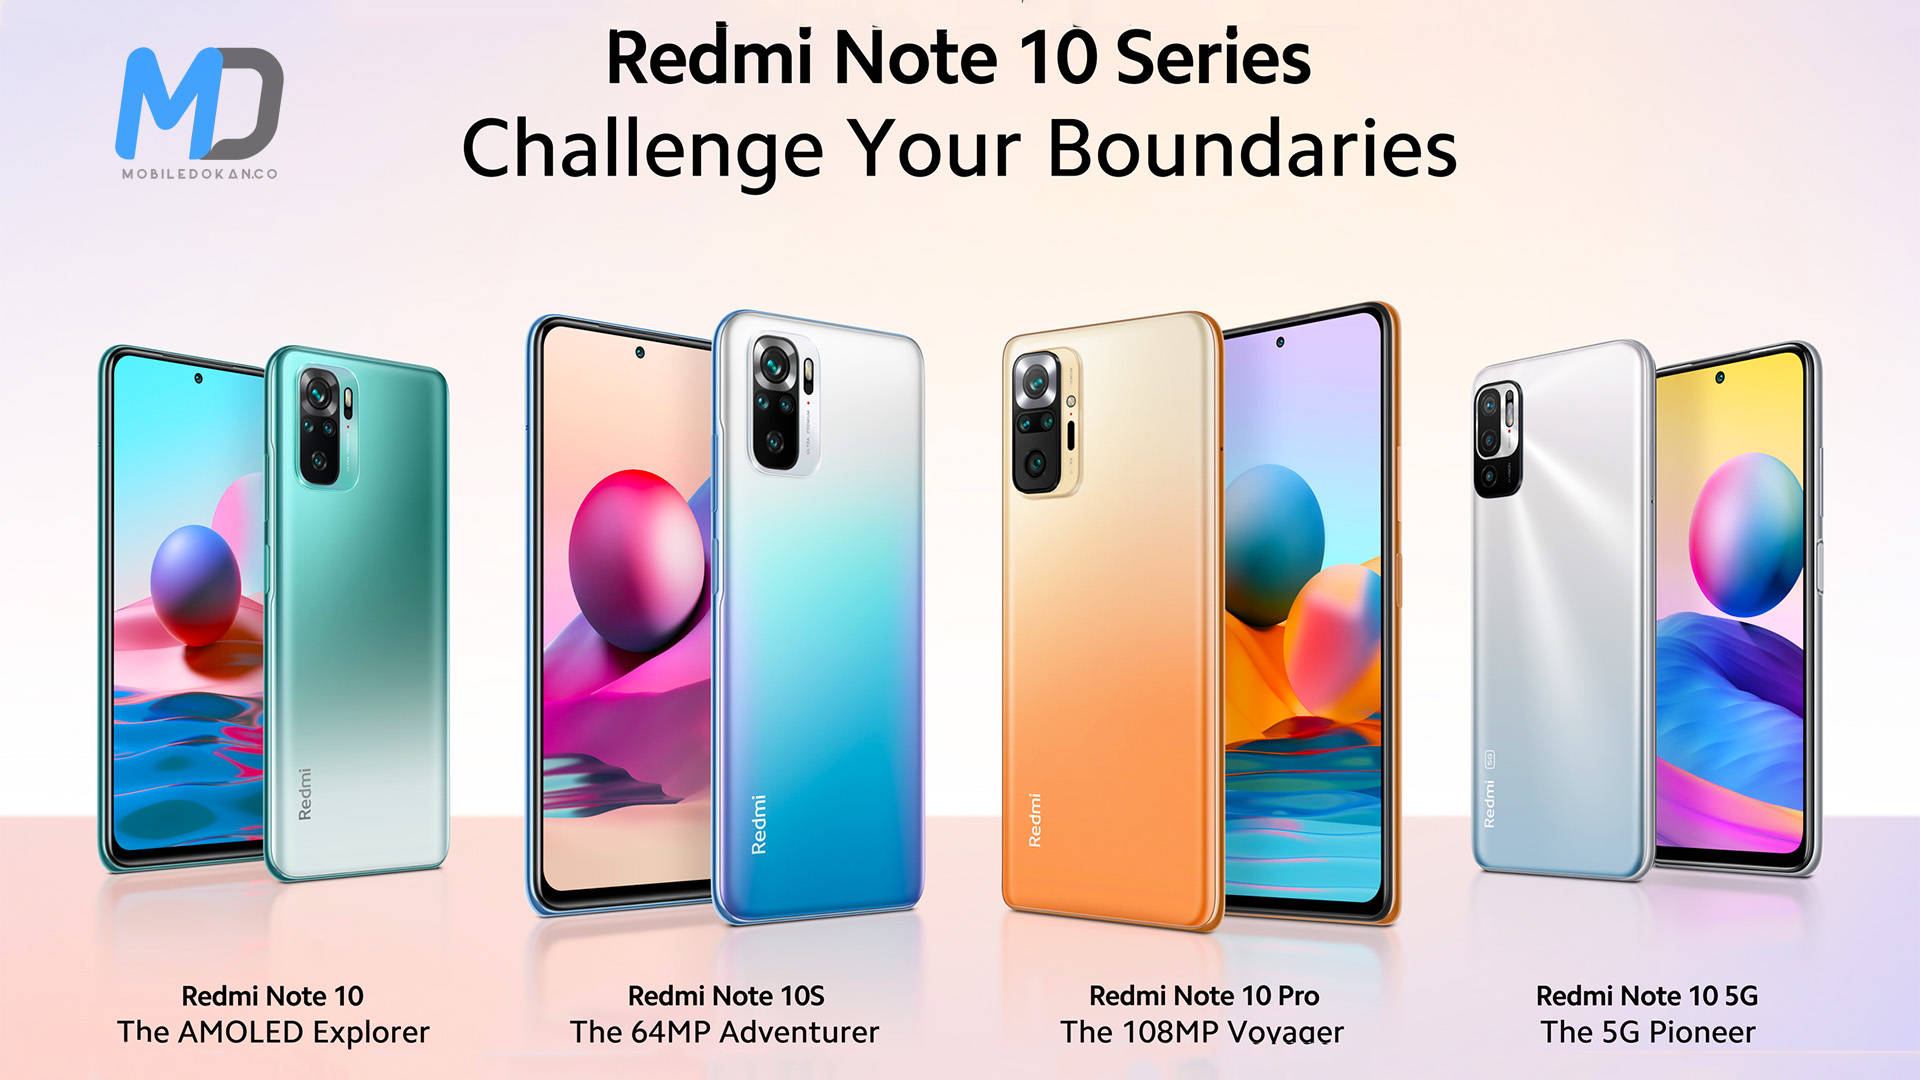 Redmi Note 10 series globally